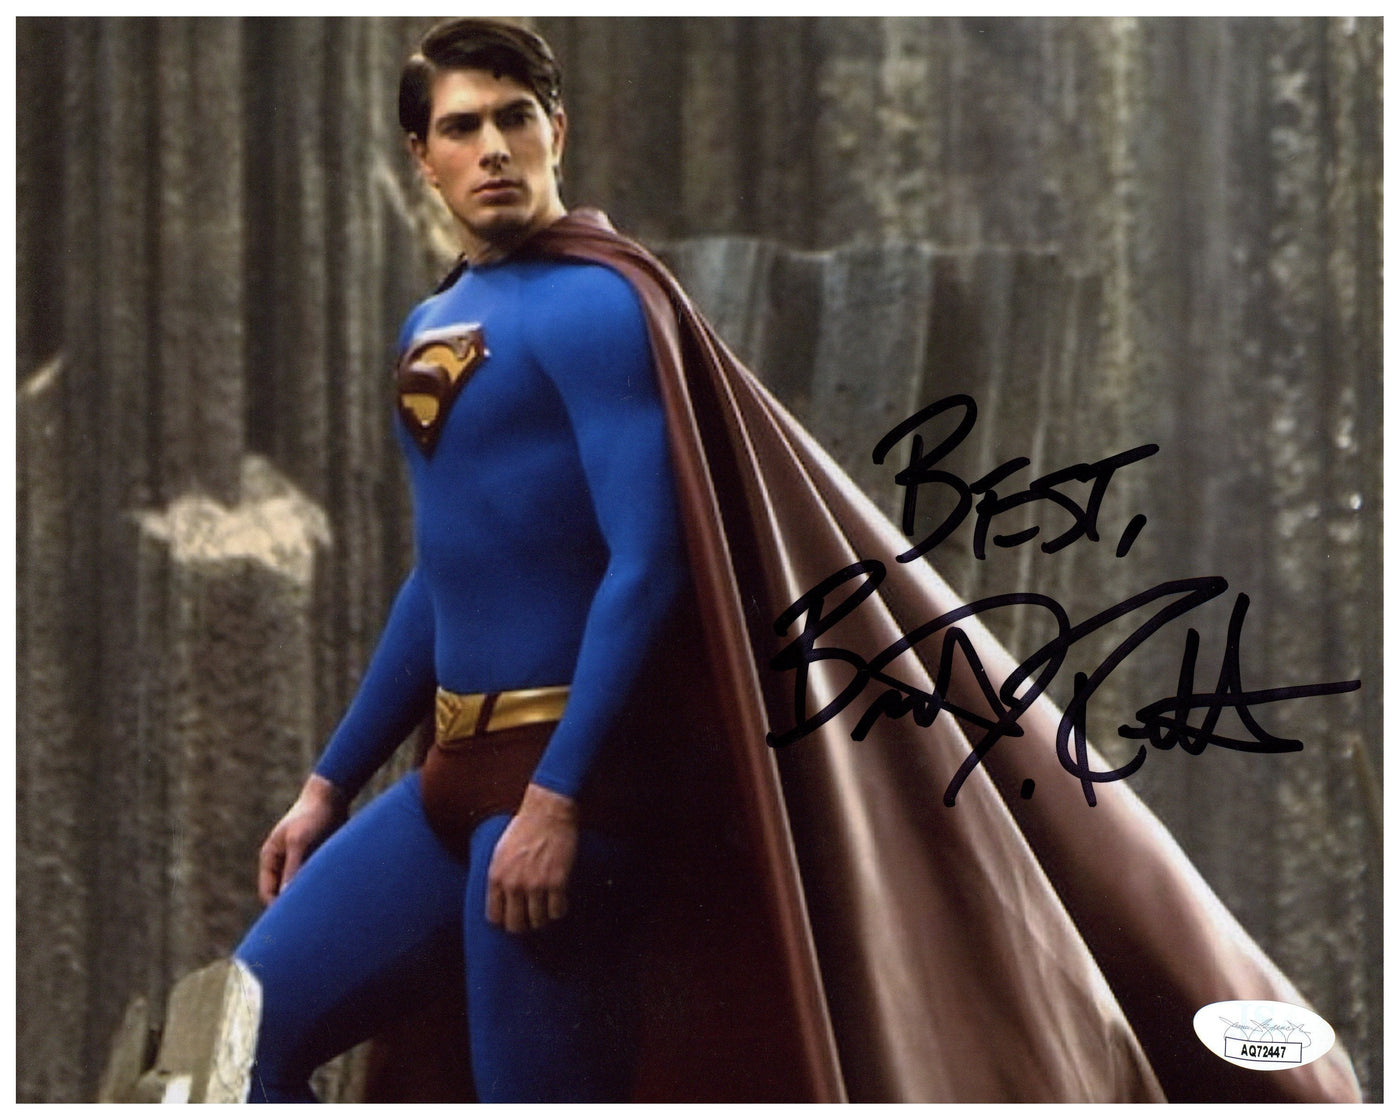 Brandon Routh Signed 8x10 Photo Superman Returns Autographed JSA COA